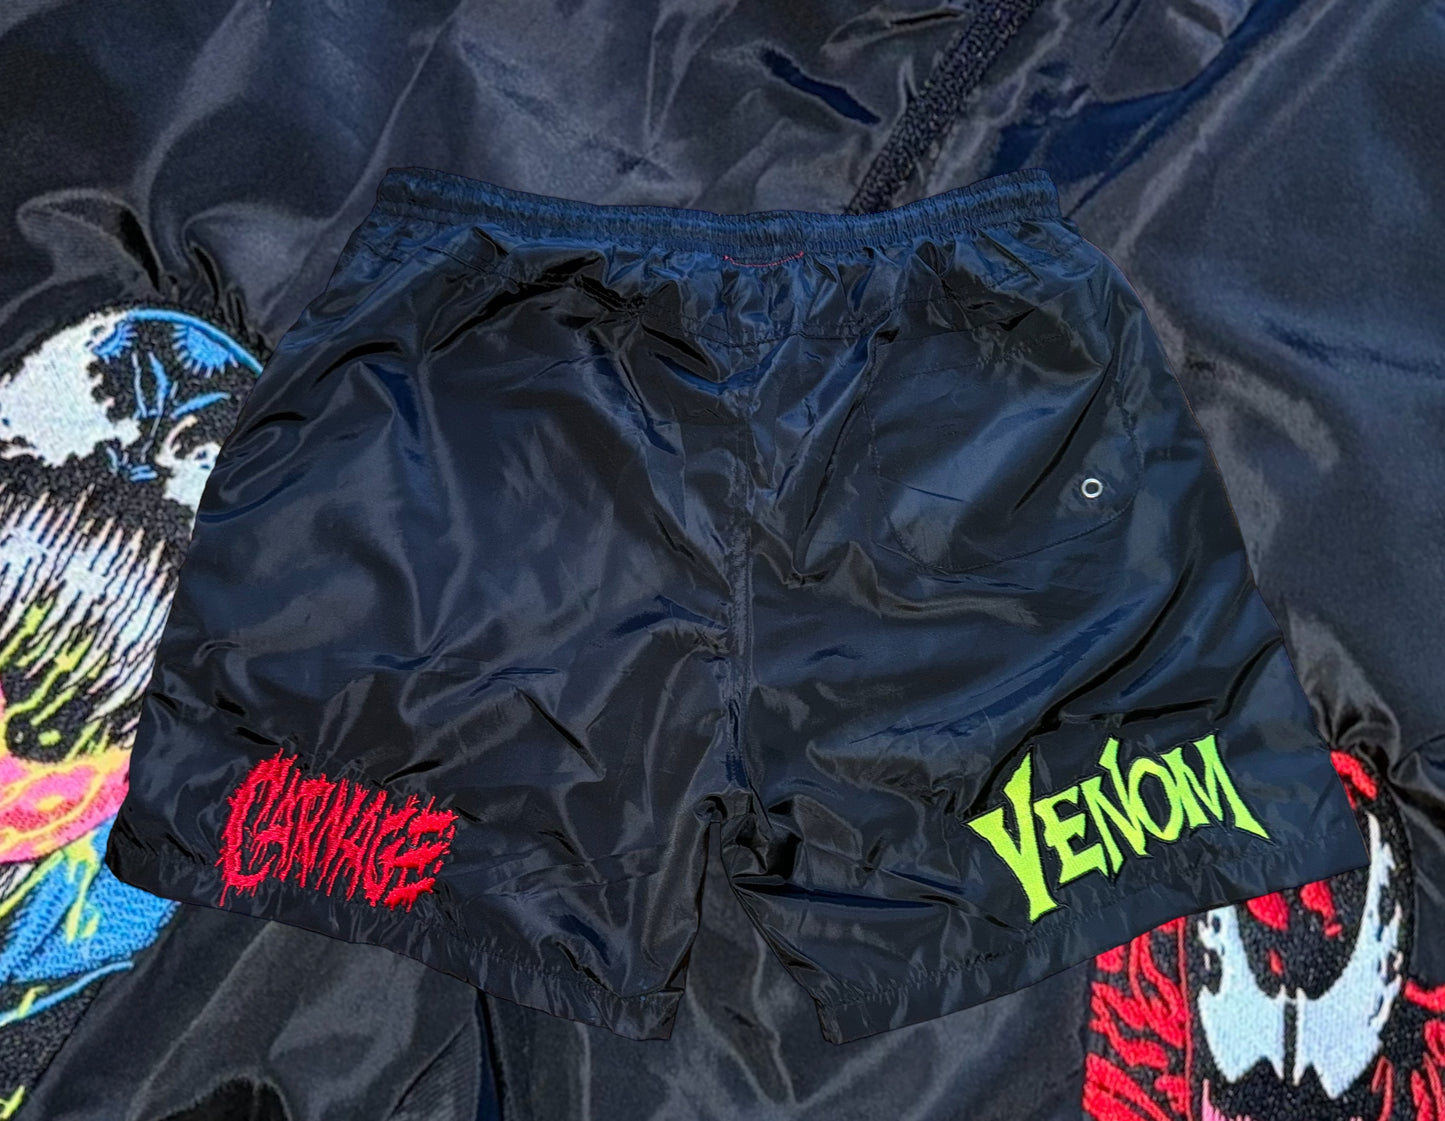 Venom VS Carnage Embroidered wind breaker shorts